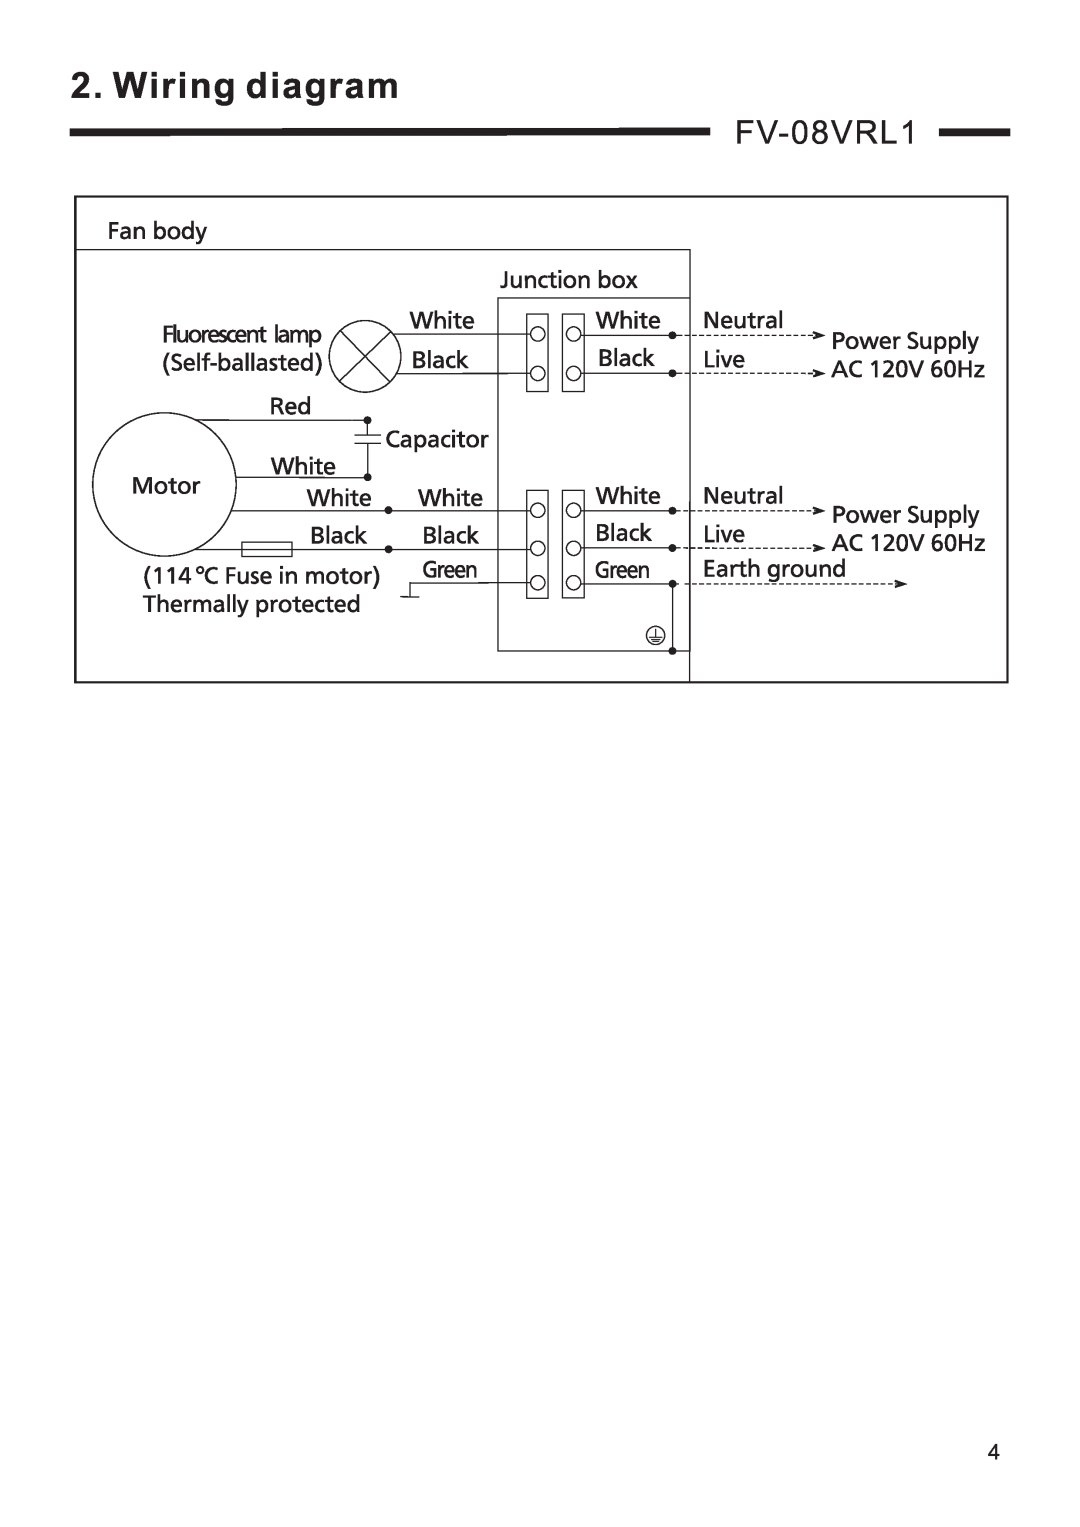 Panasonic FV-08VRL1 service manual Wiring diagram 